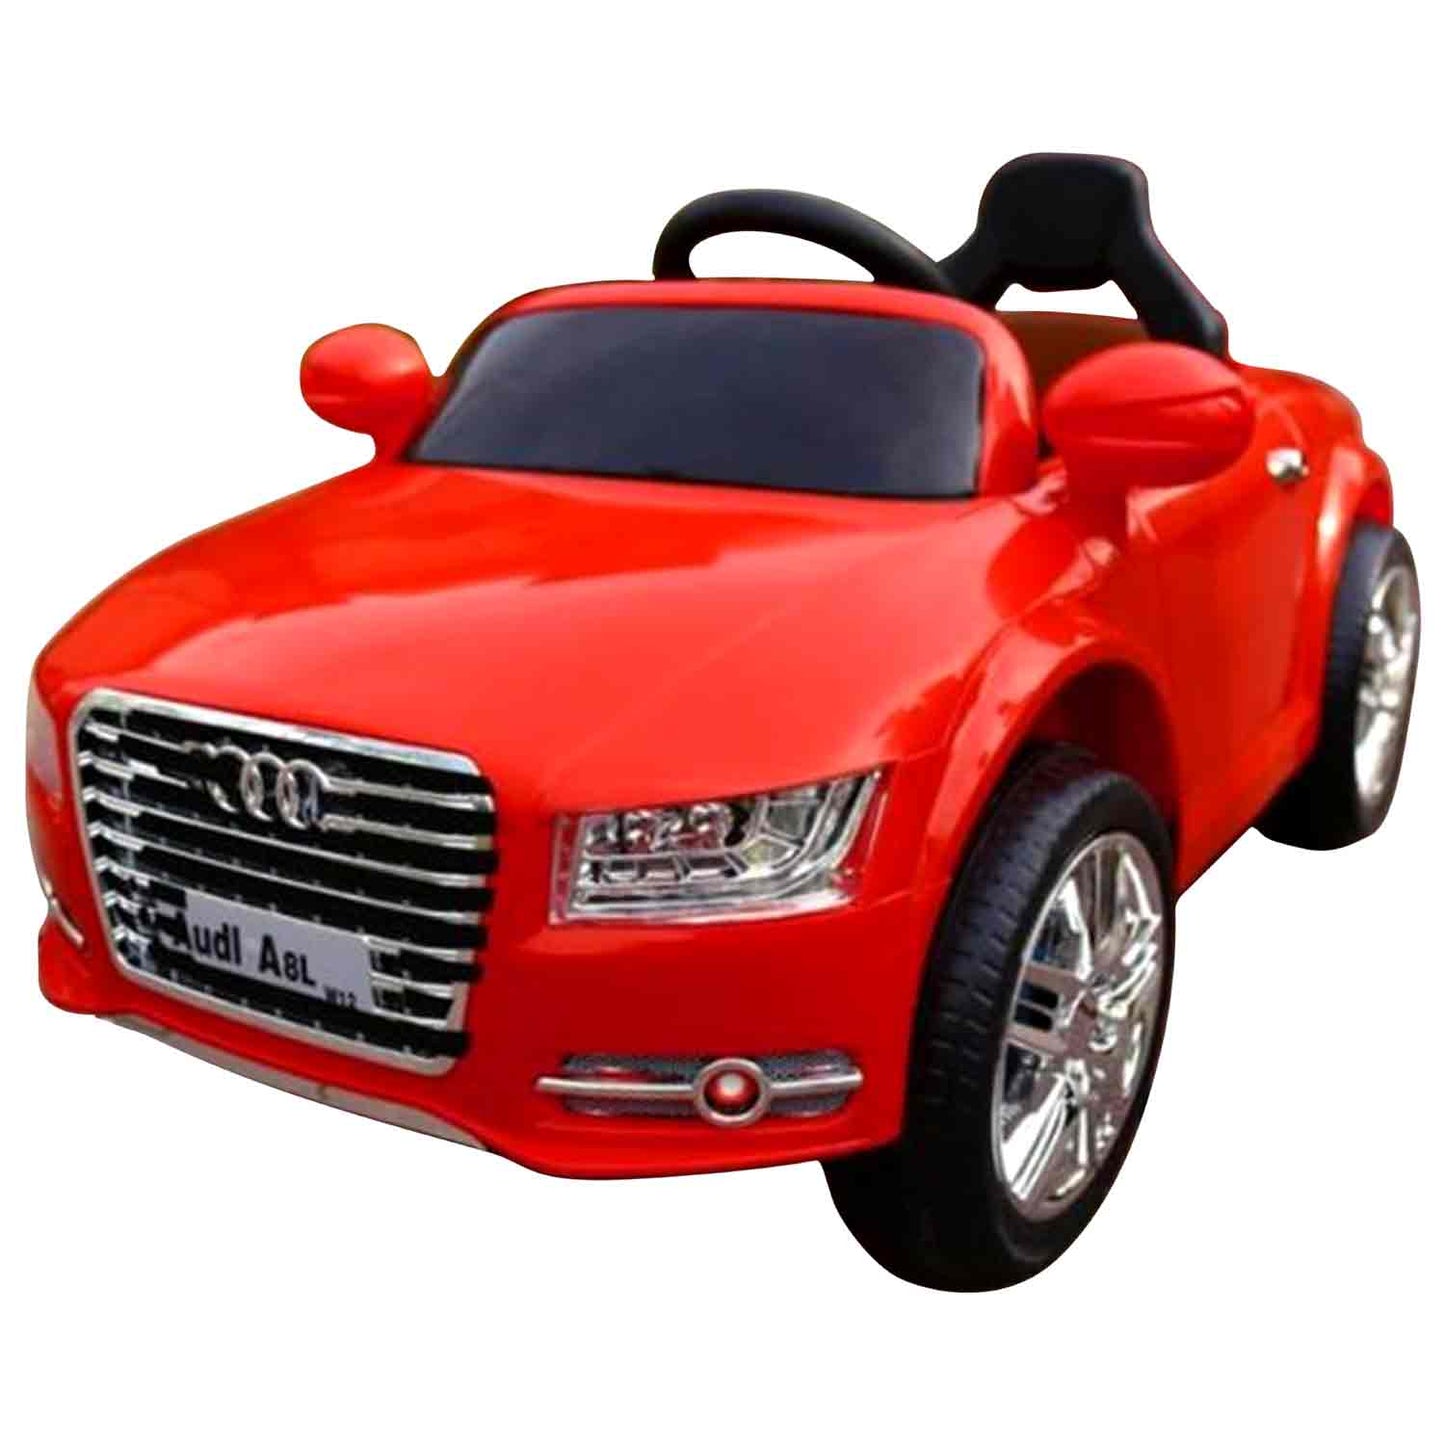 Audi A8L Toy Car